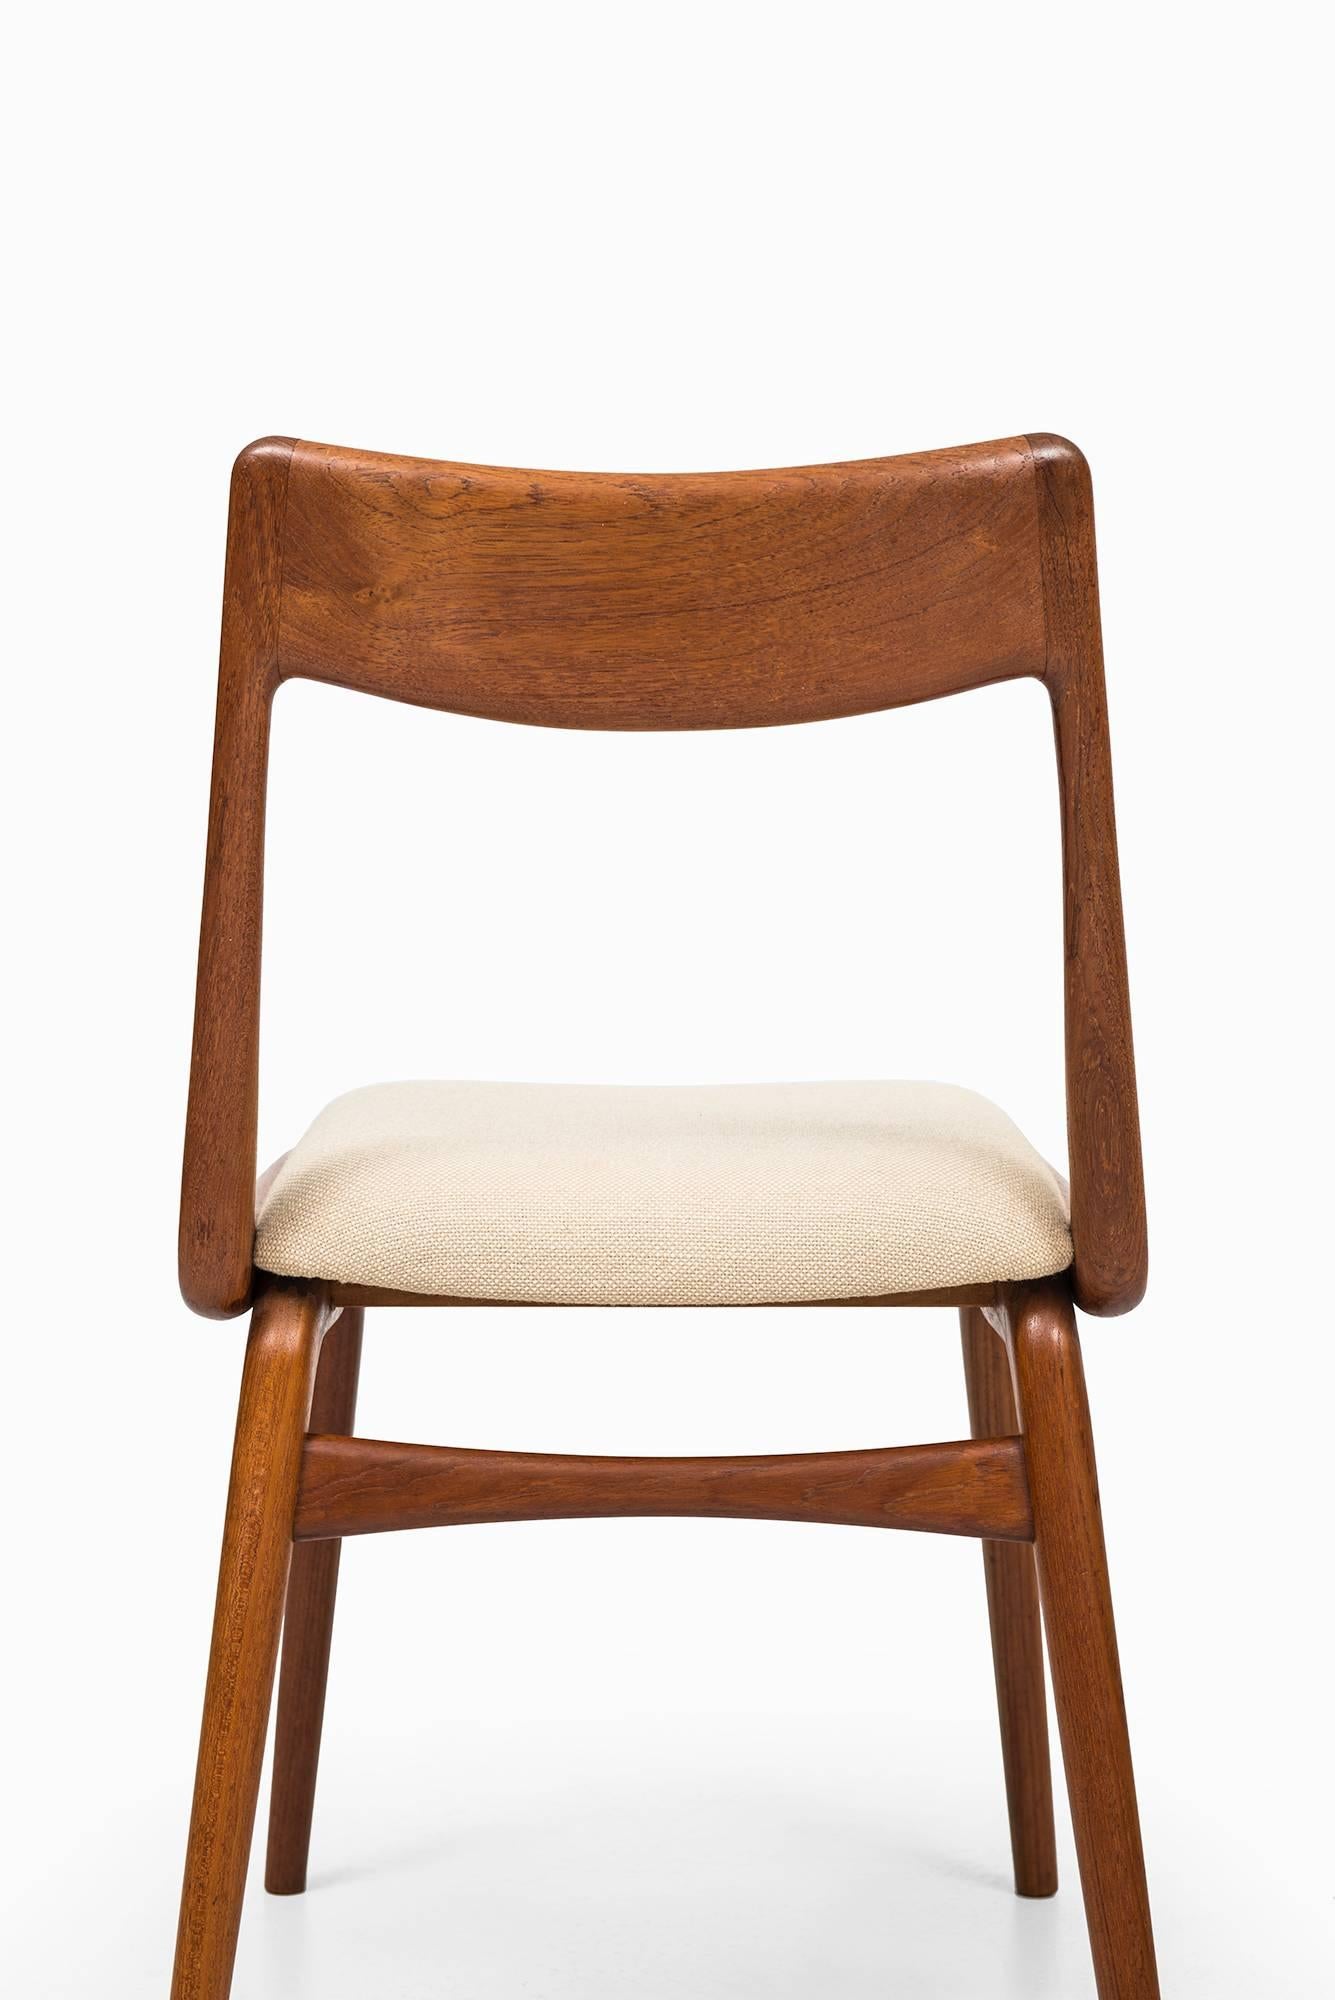 Scandinavian Modern Alfred Christensen Dining Chairs Model Boomerang Produced in Denmark